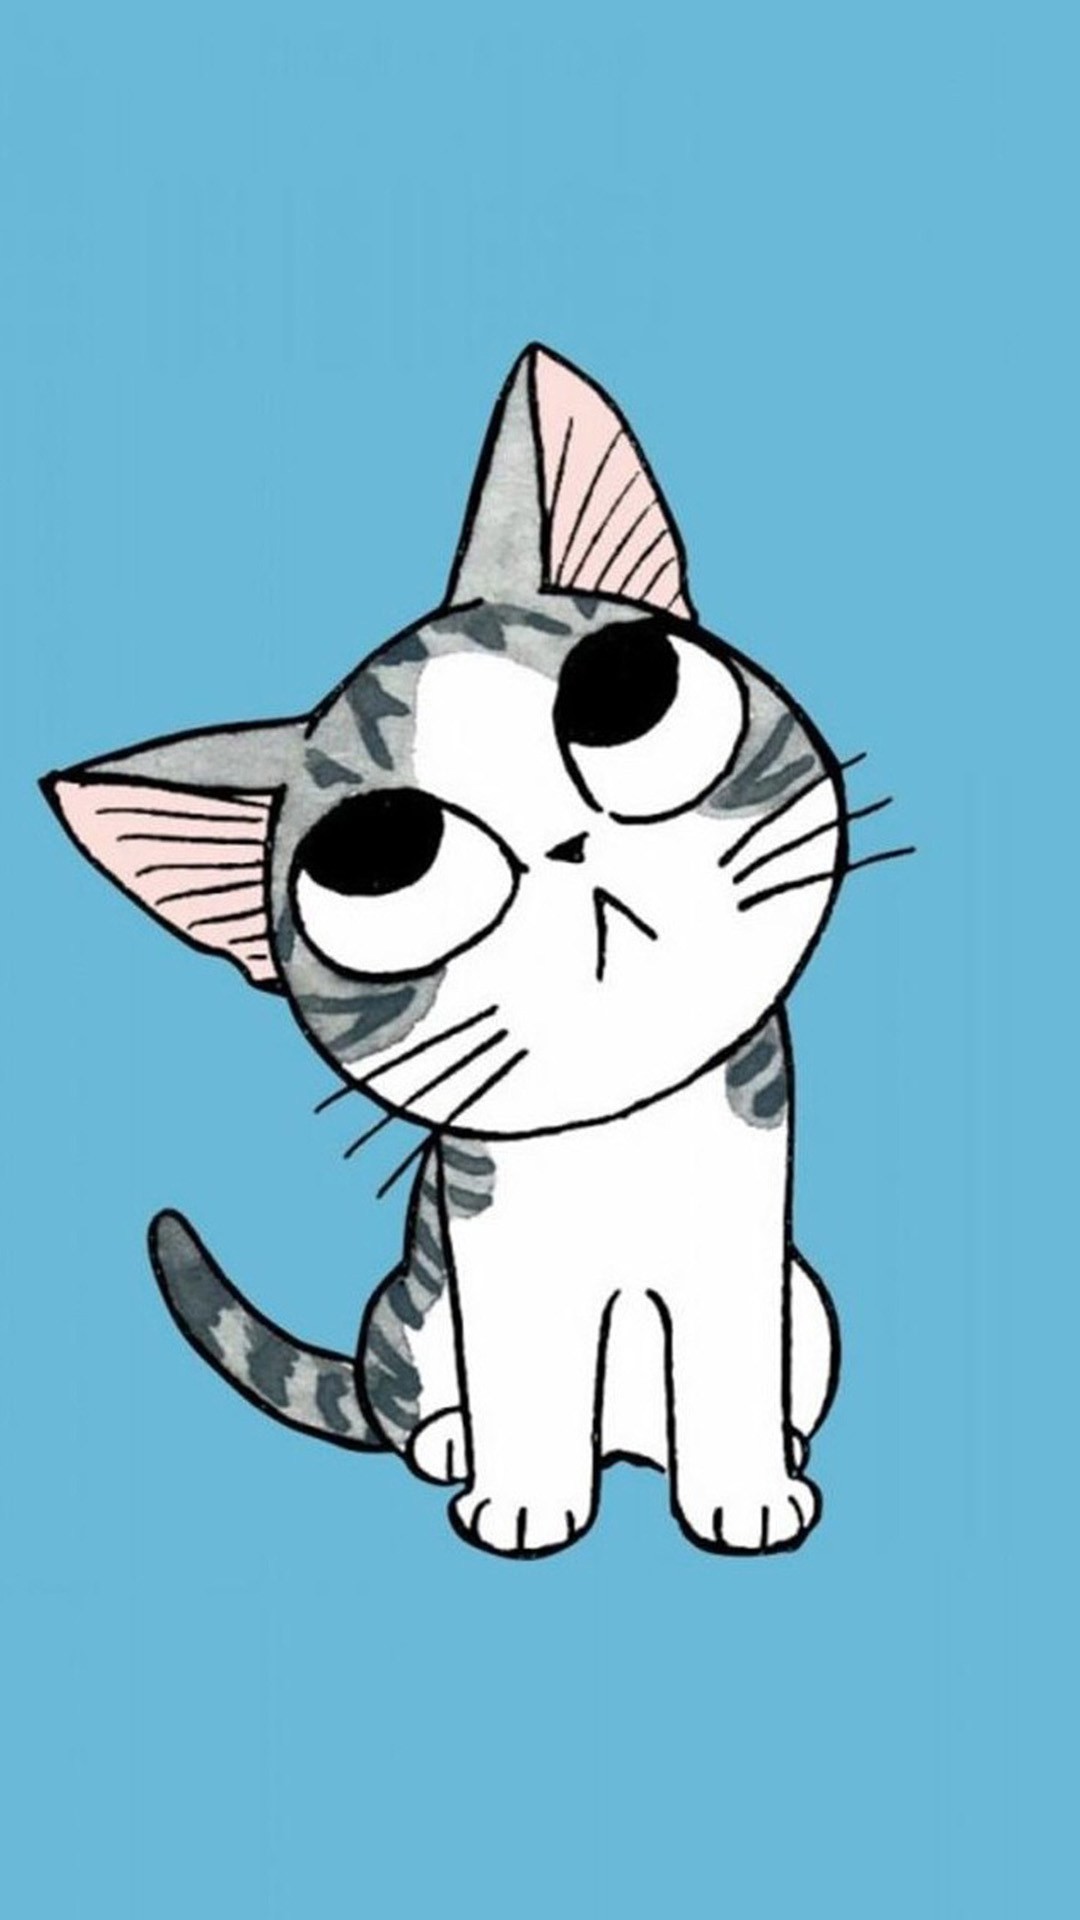 1080x1920 Tumblr Wallpaper Cat Iphone Wallpapers Simple Funny Cat Wallpaper